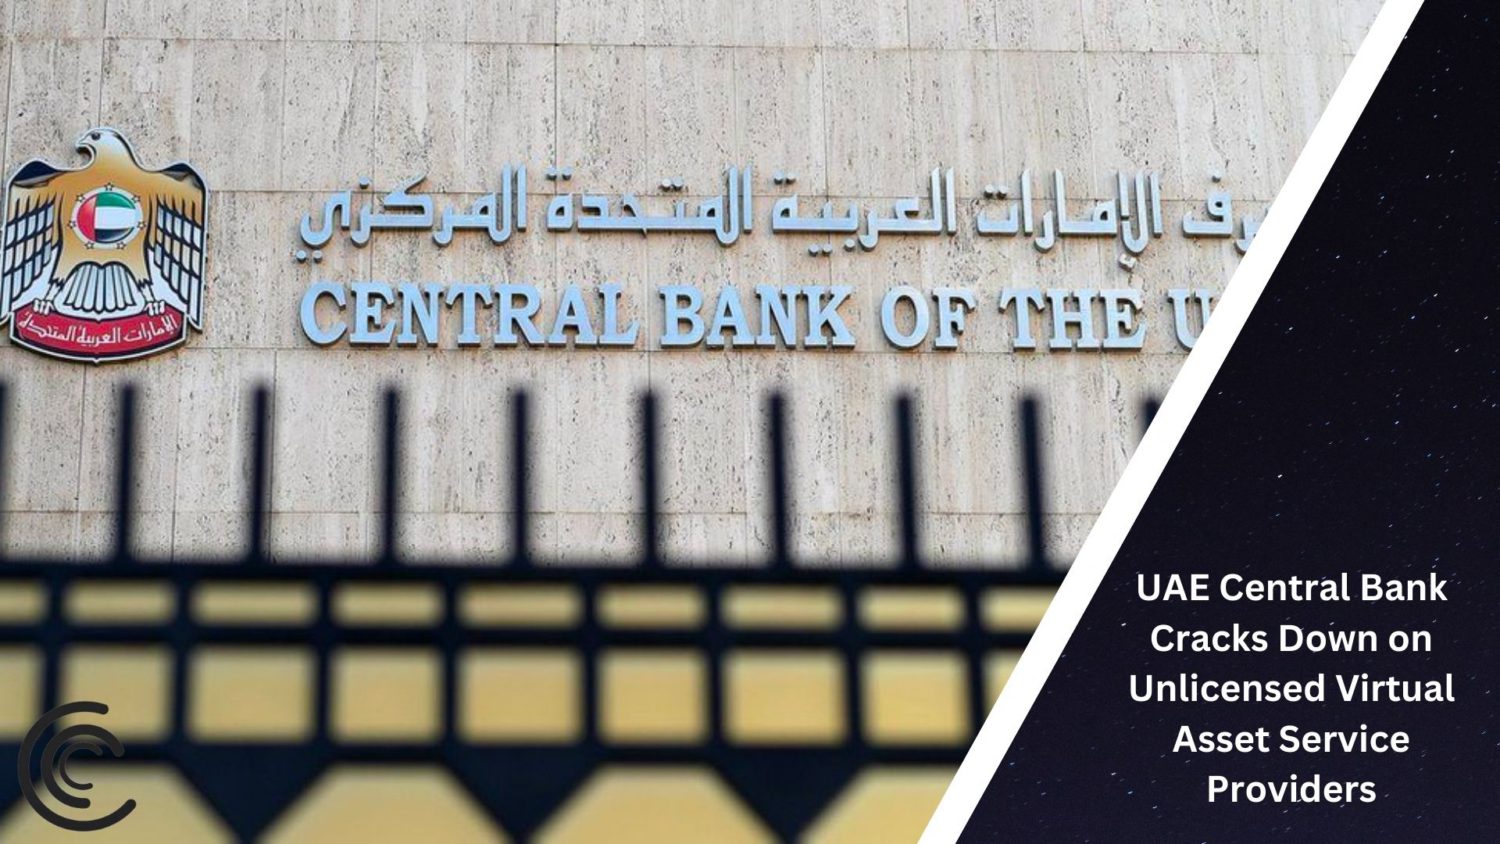 Uae Central Bank Cracks Down On Unlicensed Virtual Asset Service Providers